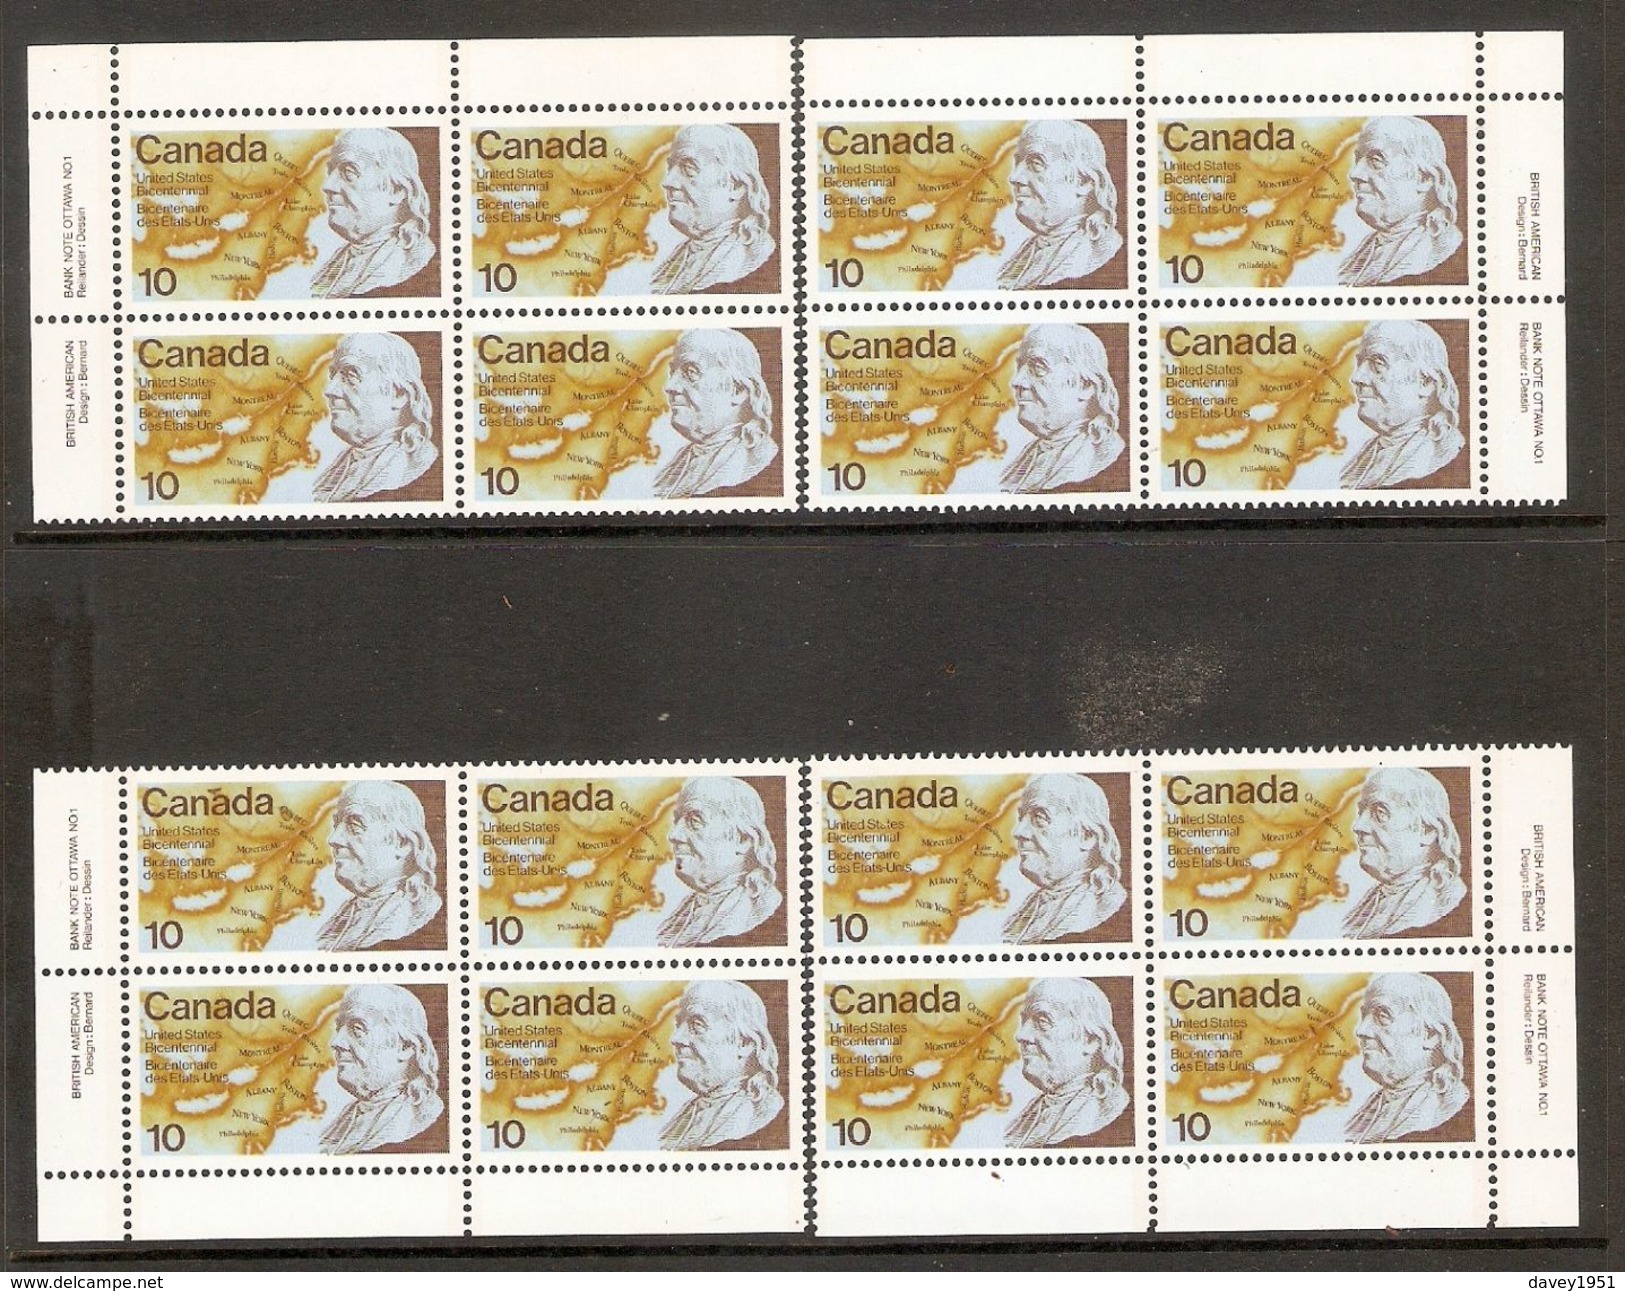 006068 Canada 1976 US Bicentennial 10c Plate Block Set MNH - Plate Number & Inscriptions